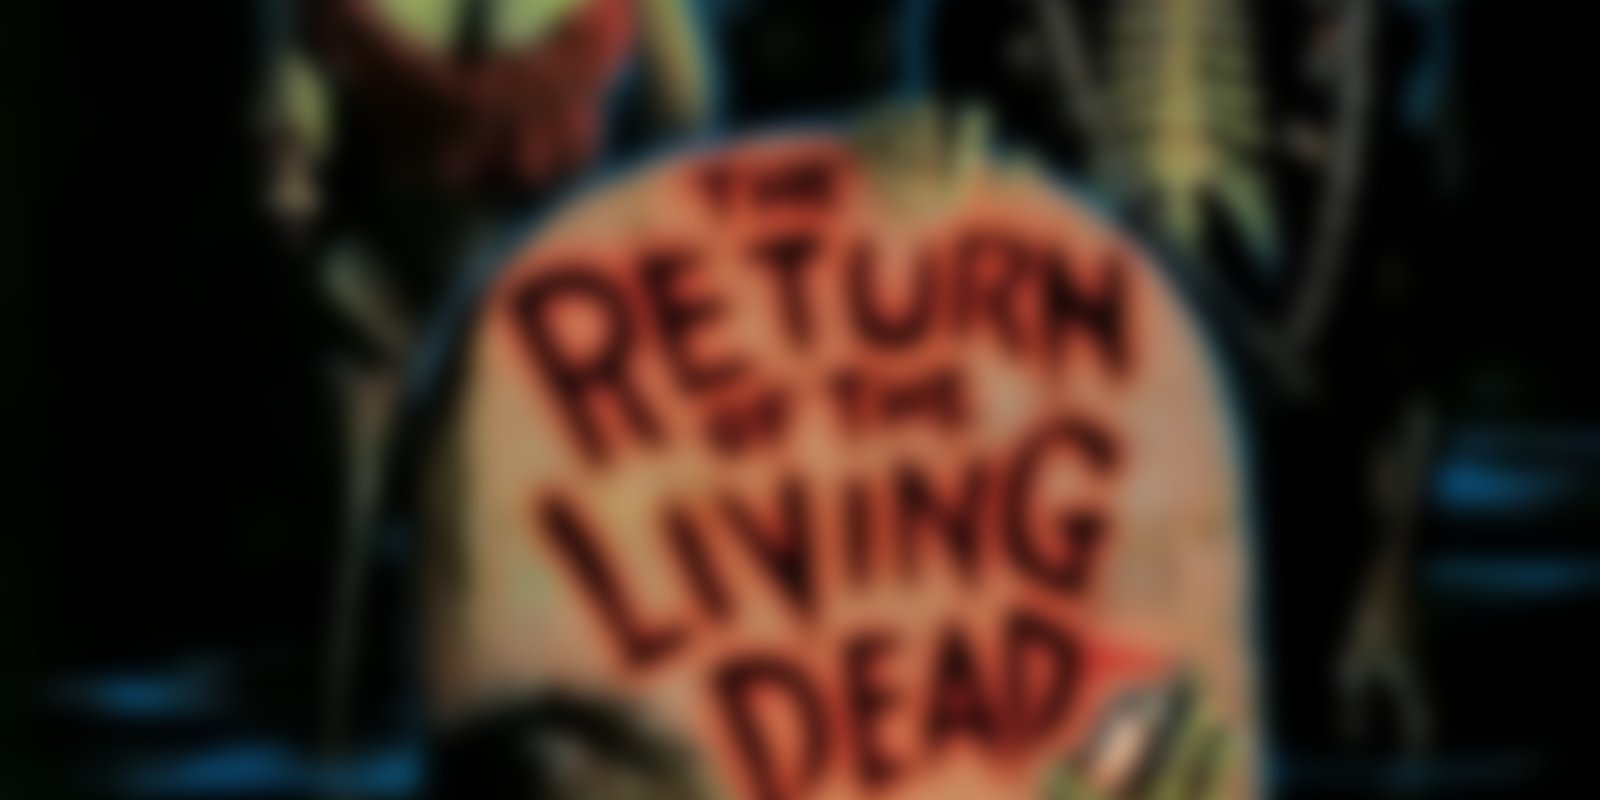 Return of the Living Dead - Die Rückkehr der lebenden Toten